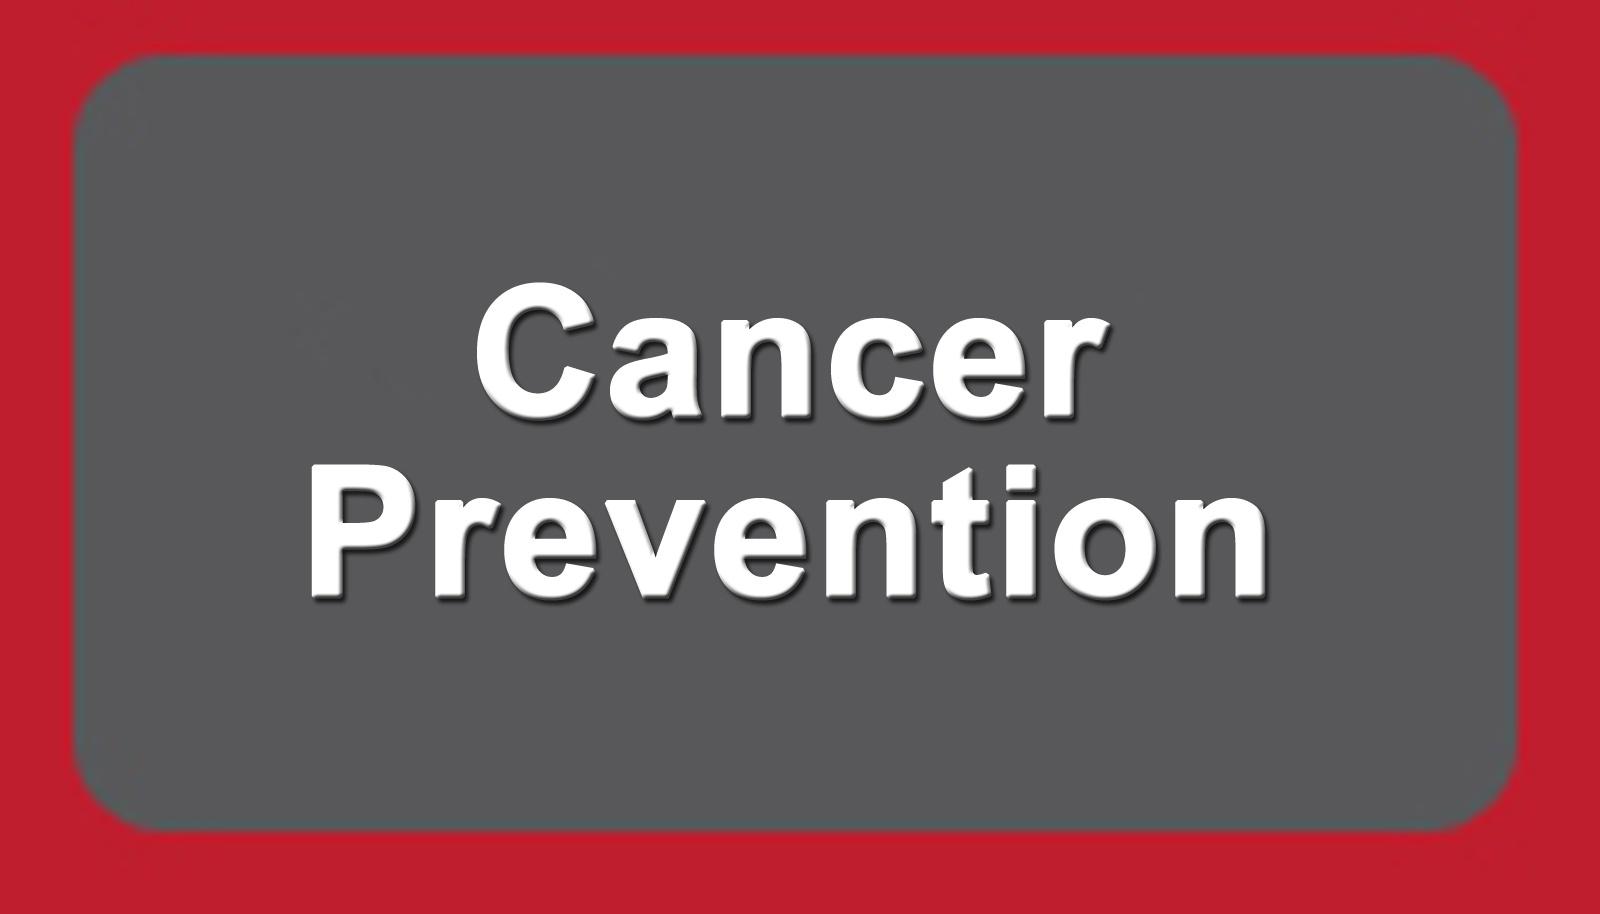 Menu selection-Preventing Cancer